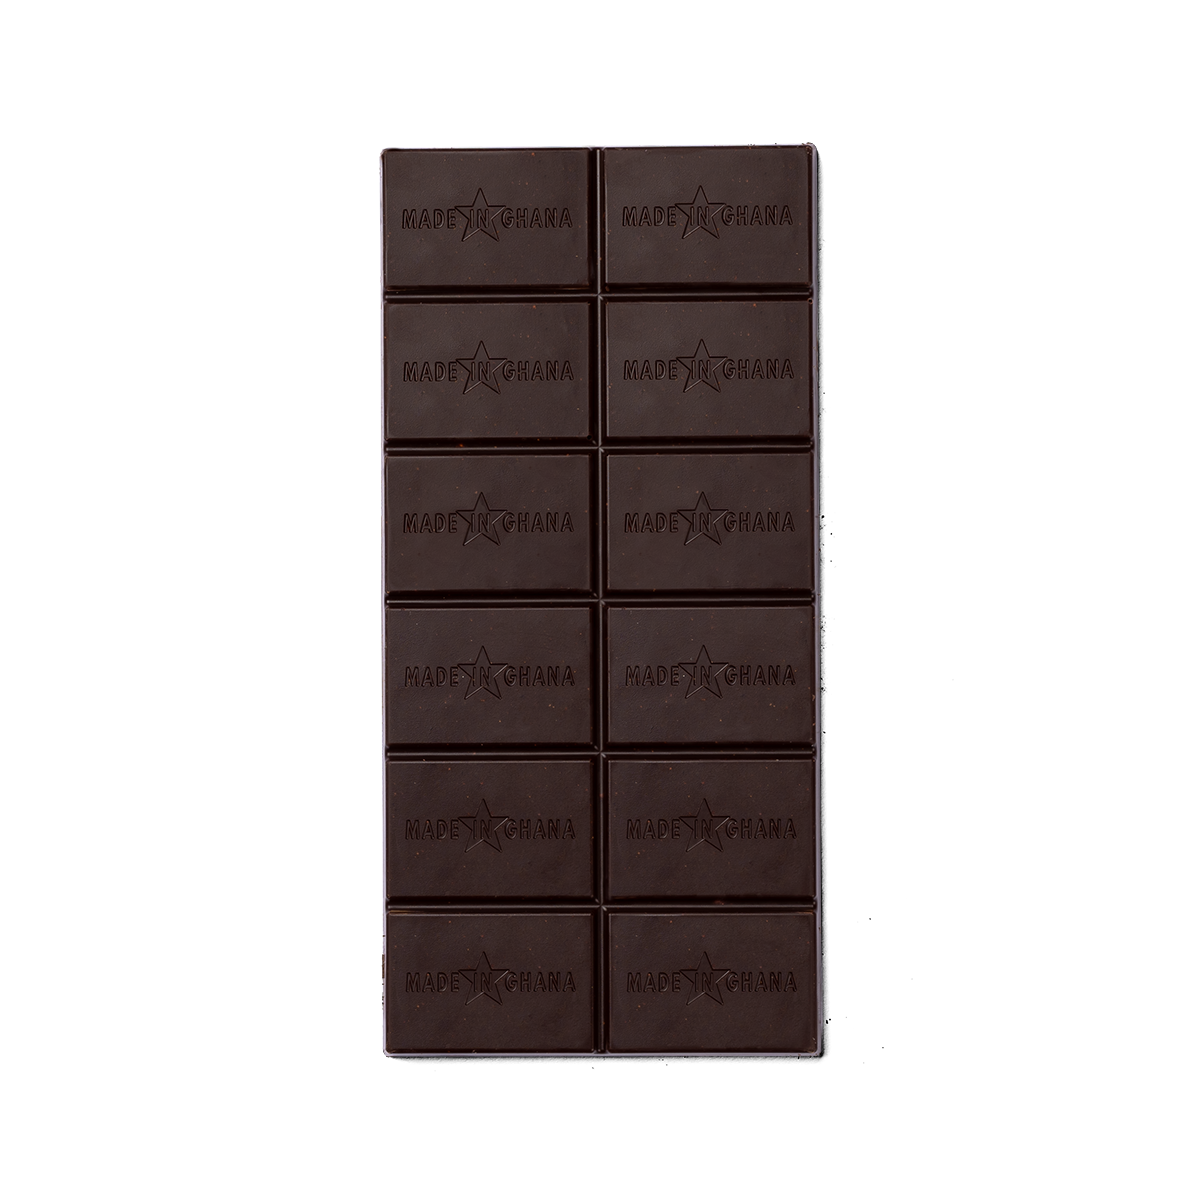 70% organic dark chocolate with tigernut and almond